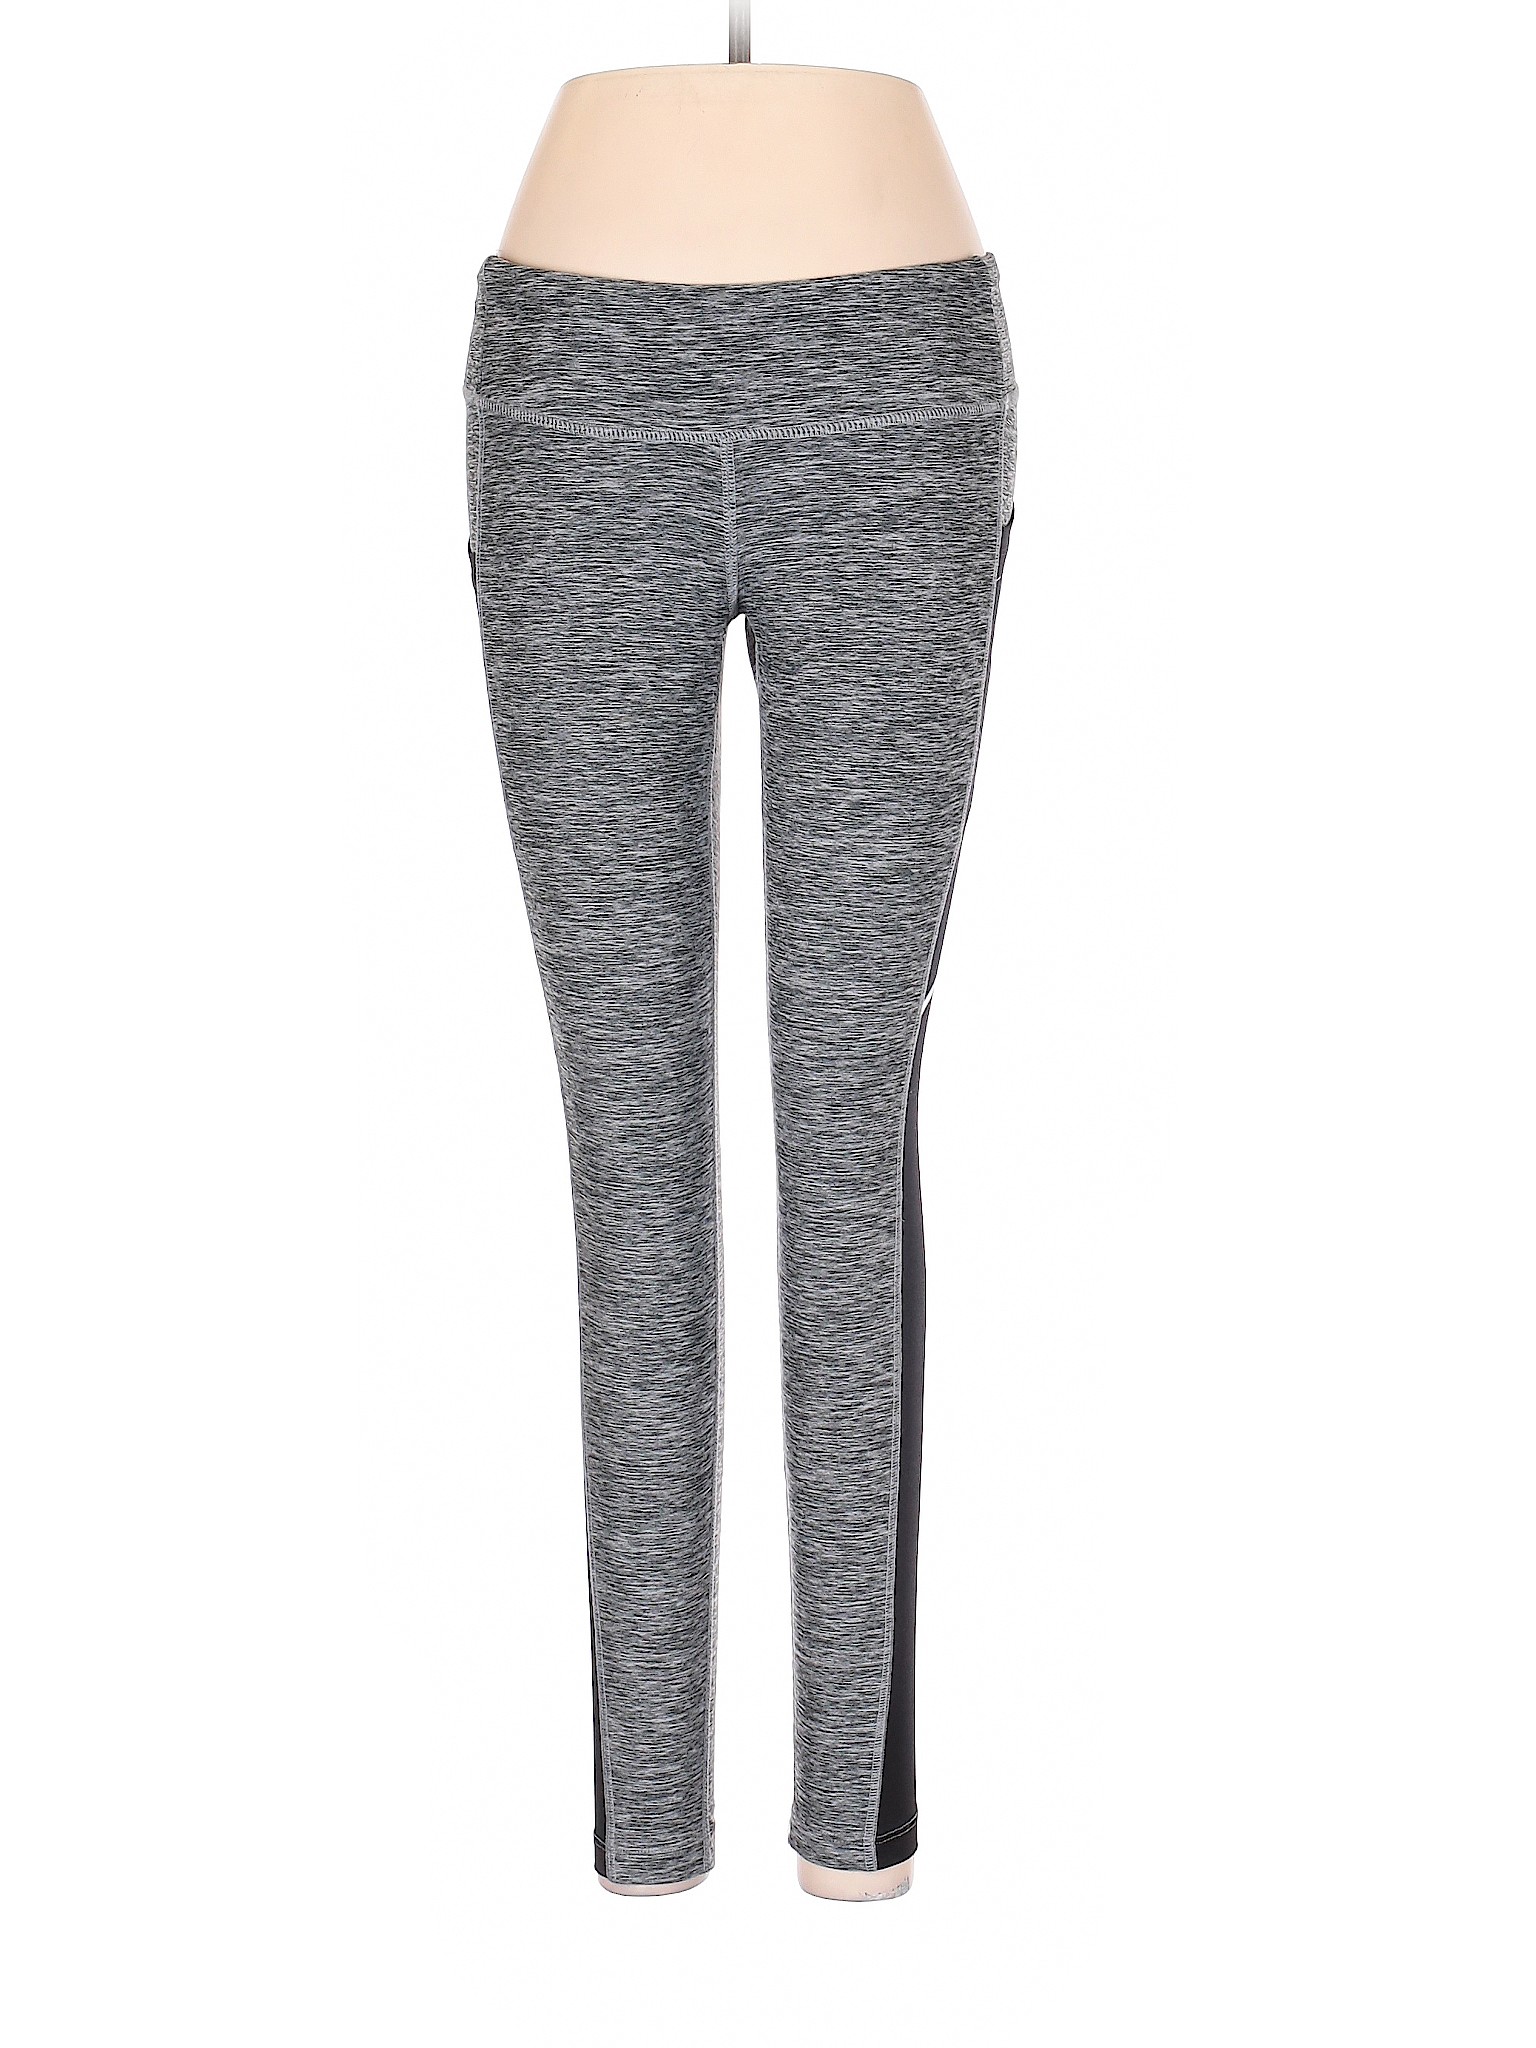 New Balance Women Gray Active Pants M | eBay